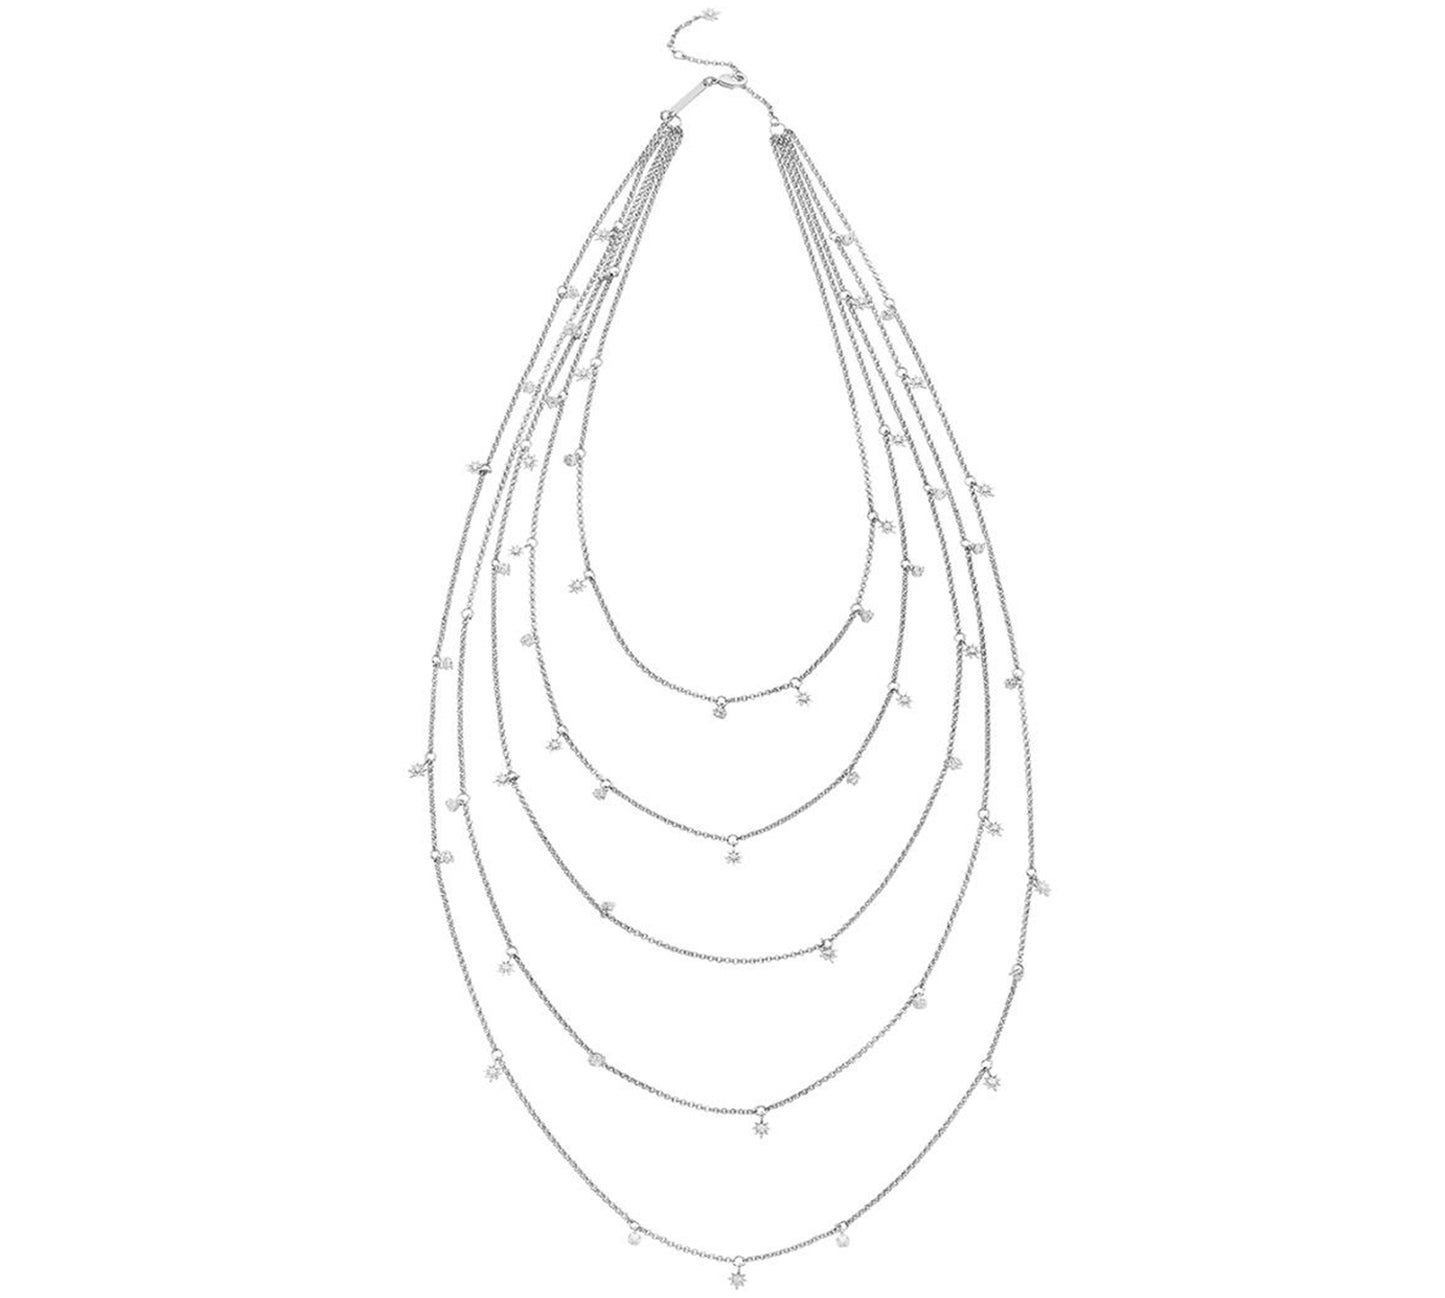 Moonsun Long Multi Strand Necklace